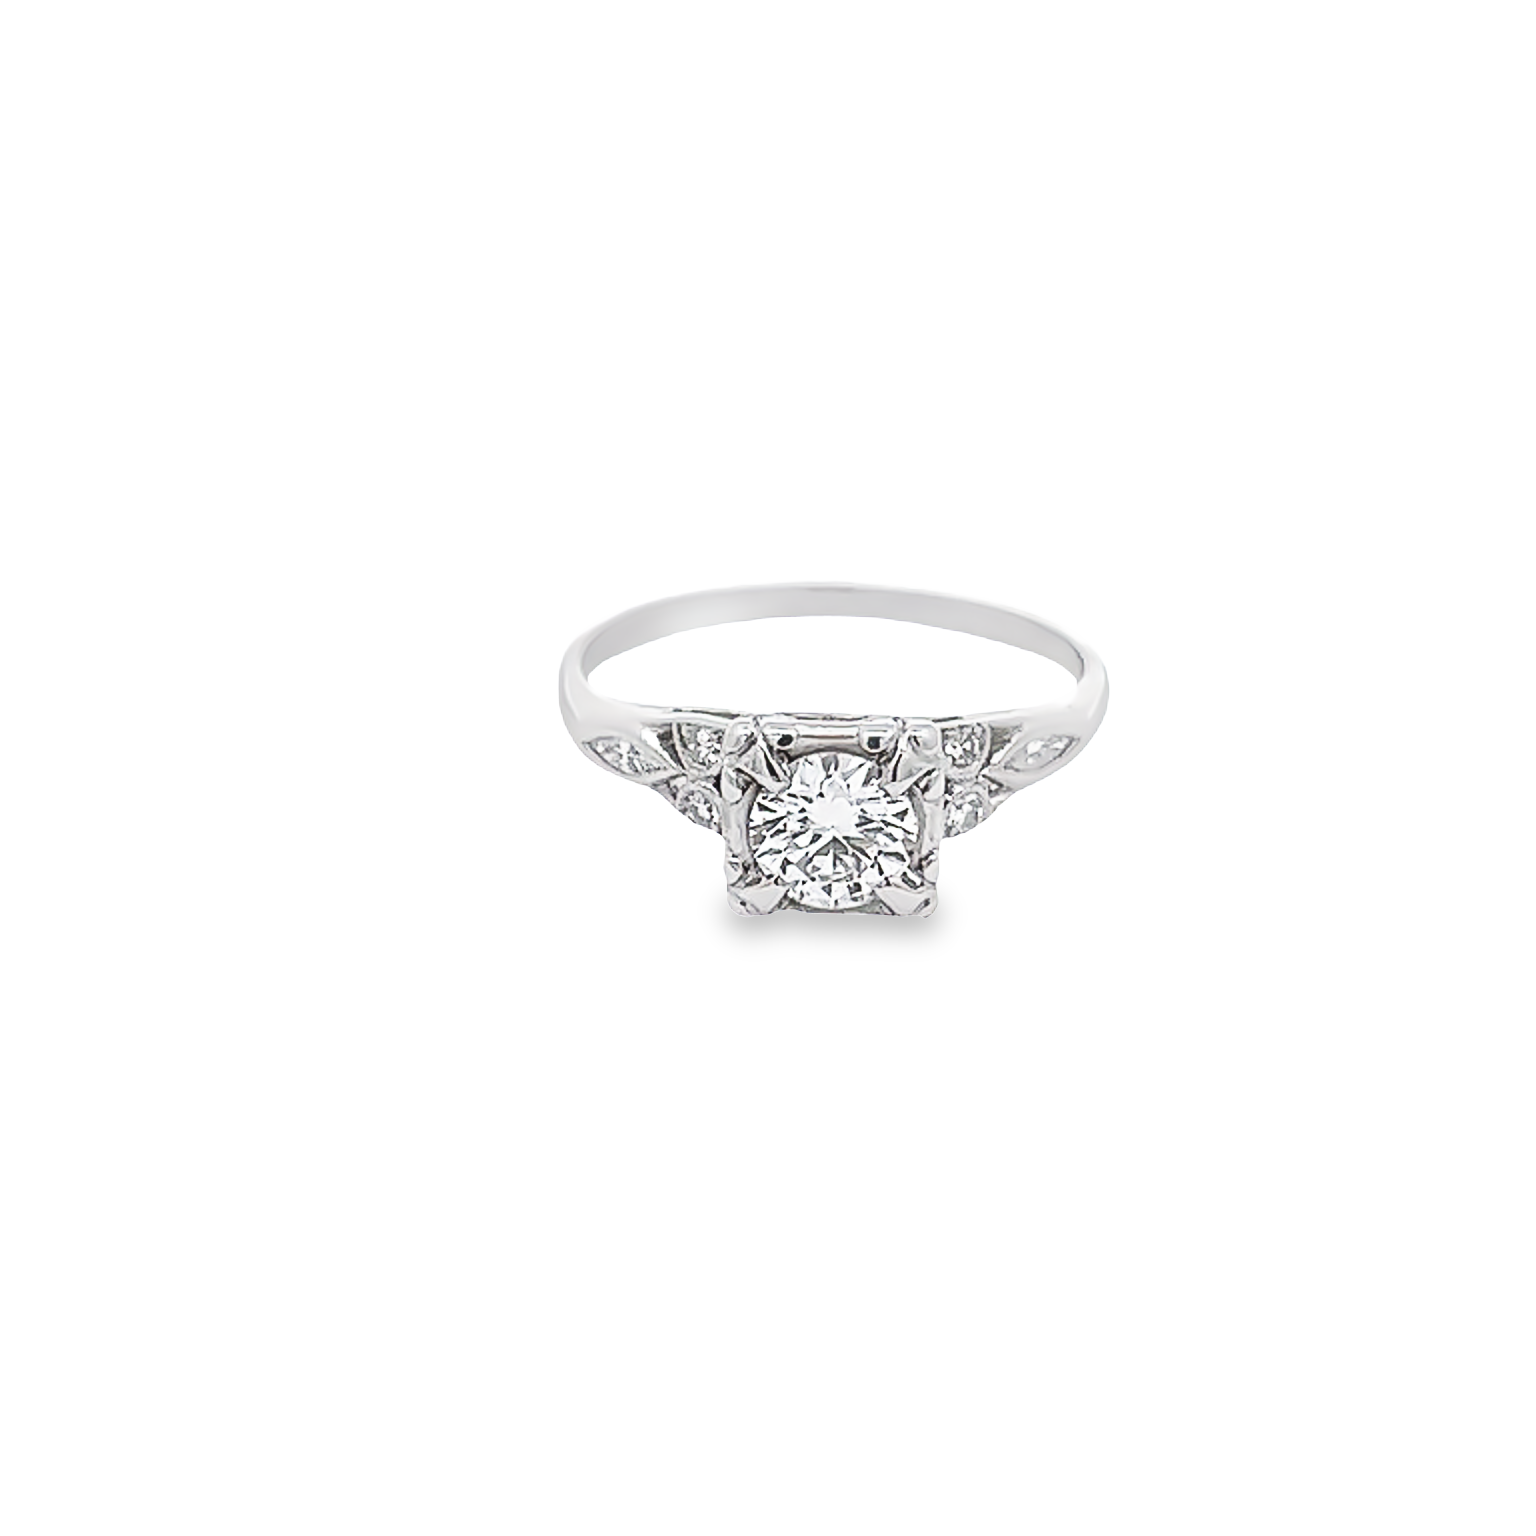 Platinum ring with one 0.60Ct round brilliant G VS Diamond and 6 single cut diamonds. Size 6